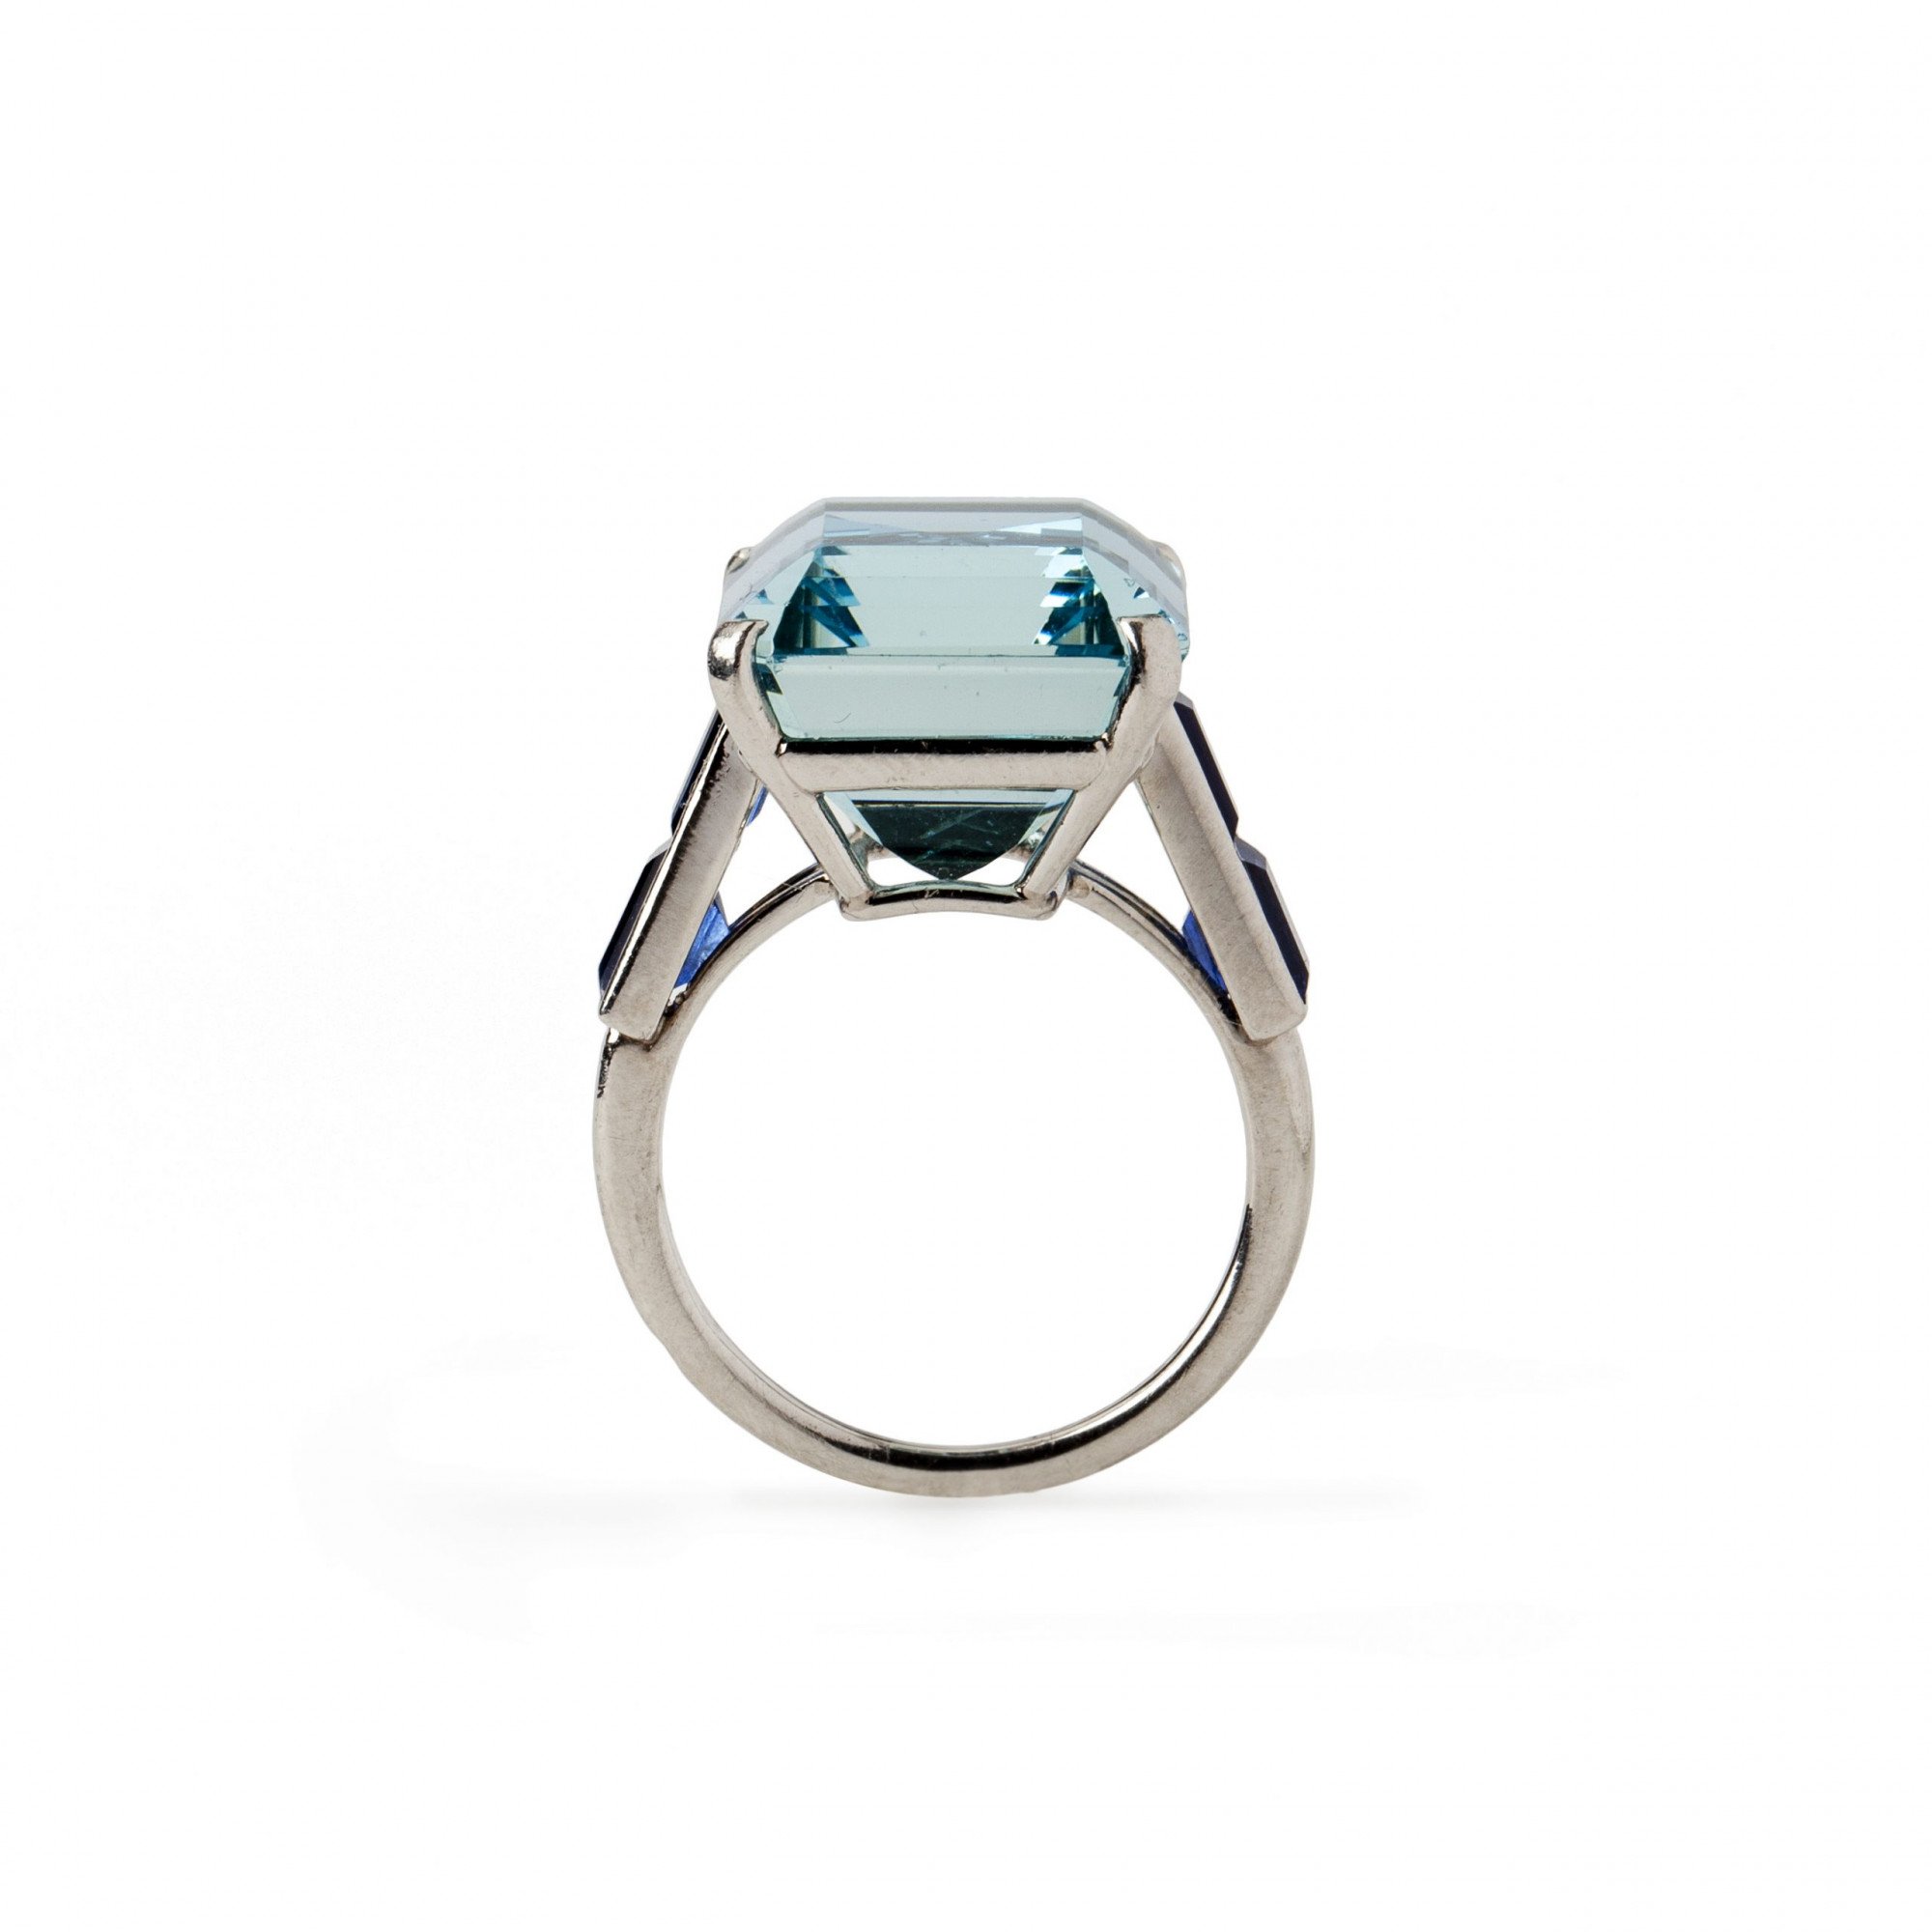 Bonhams : An aquamarine and diamond ring, by Cartier